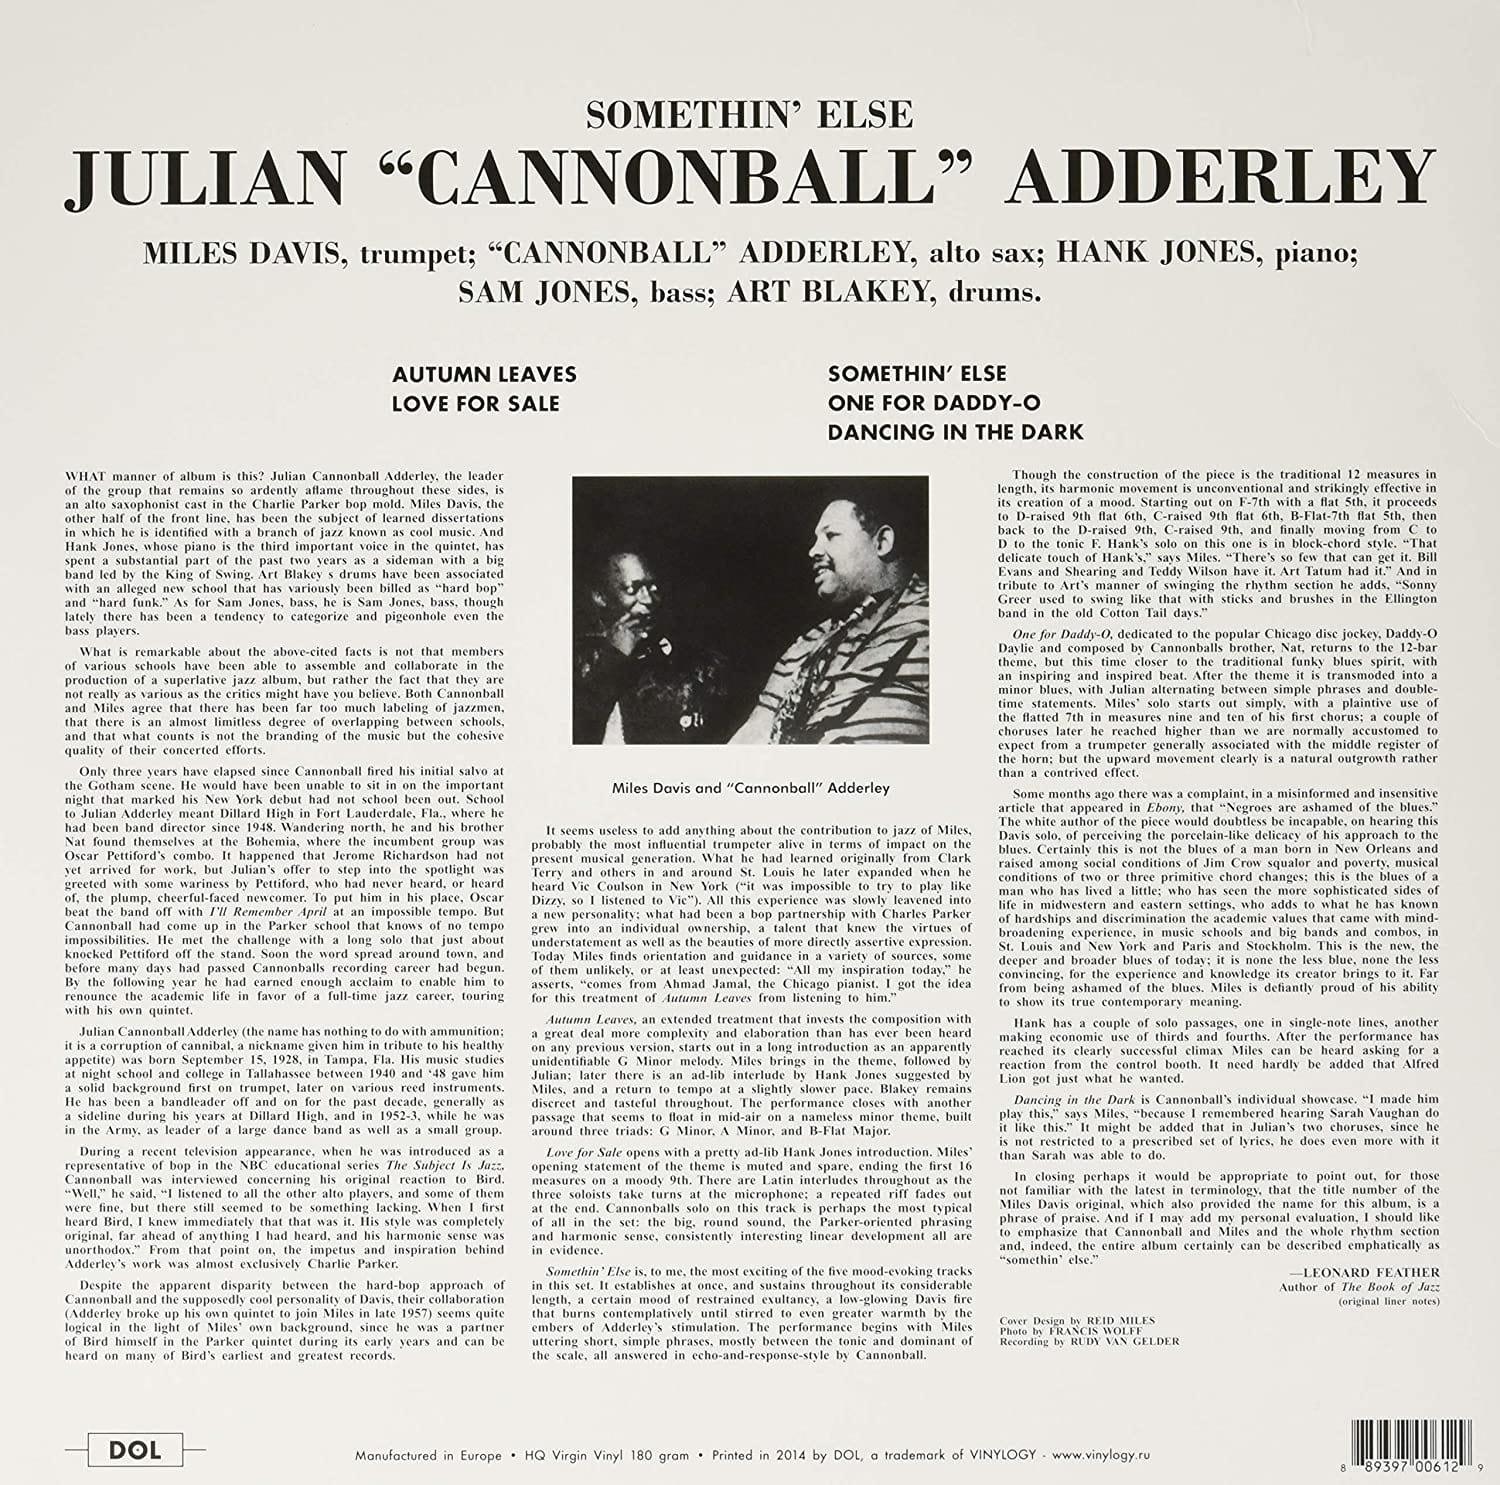 Cannonball Adderley - Somethin' Else (Limited Edition, 180 Gram, Blue  Vinyl) (LP)